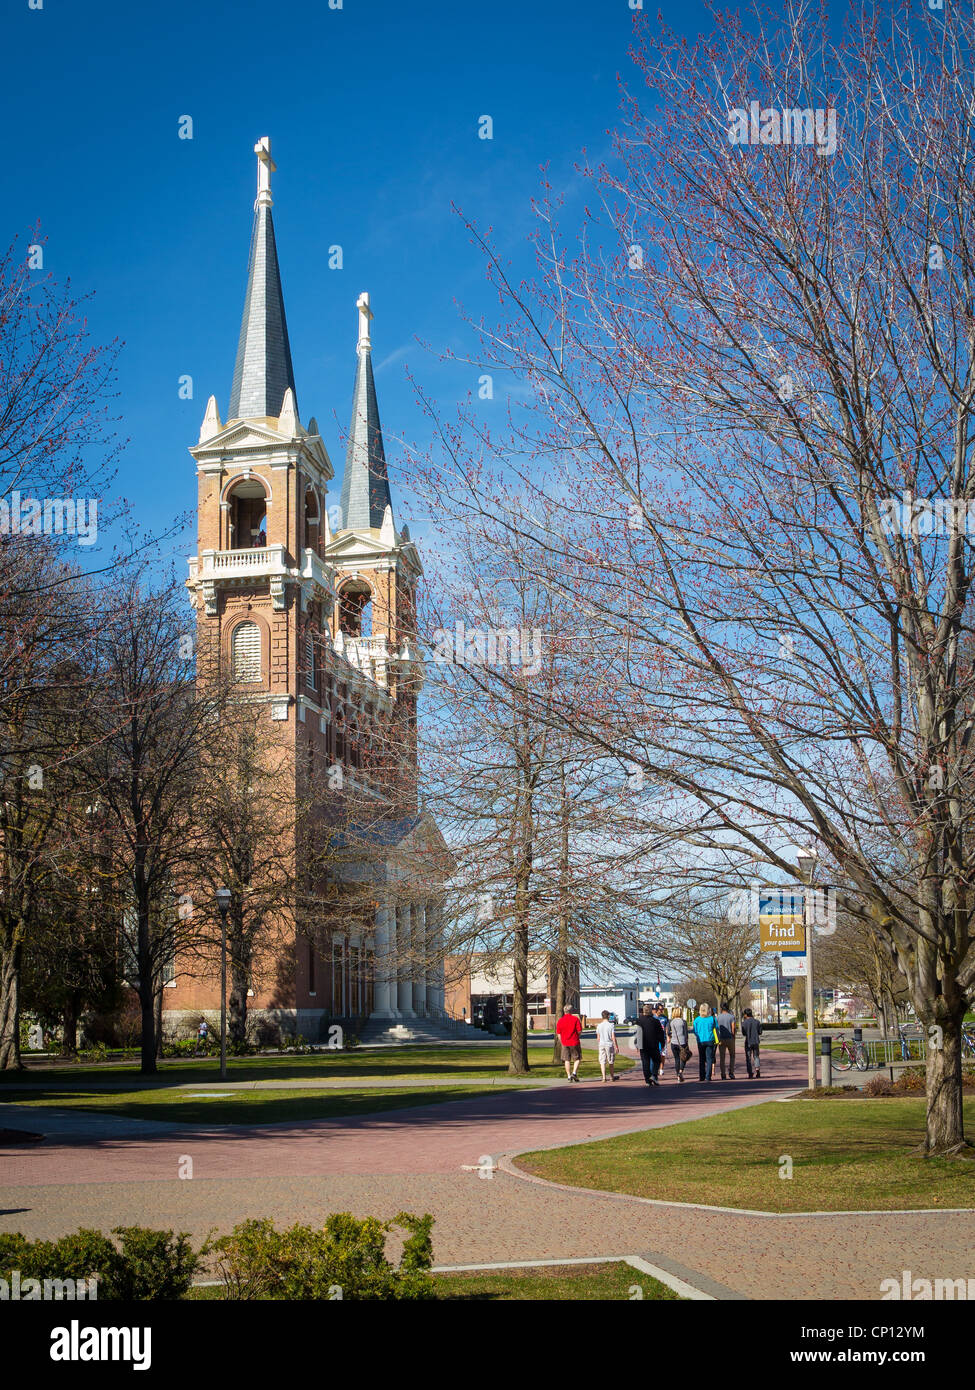 St Aloysius Church at Gonzaga University in Spokane, Washington state. Stock Photo